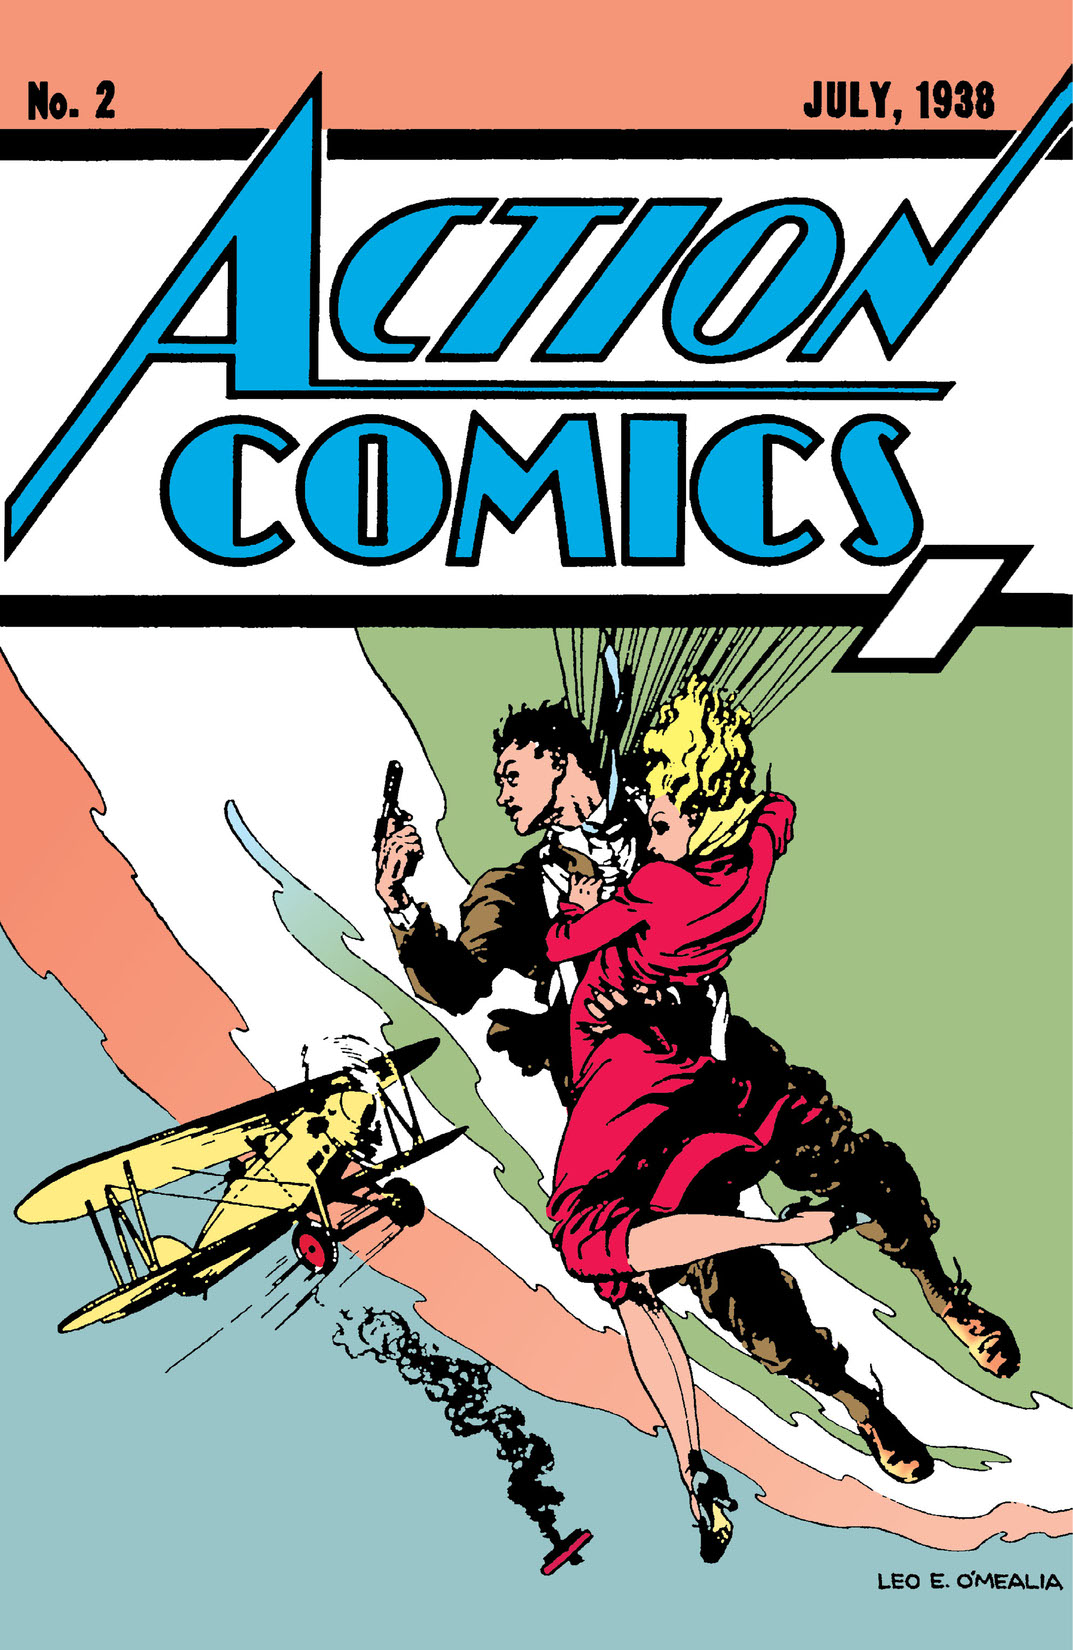 Action Comics (1938-) #2 preview images